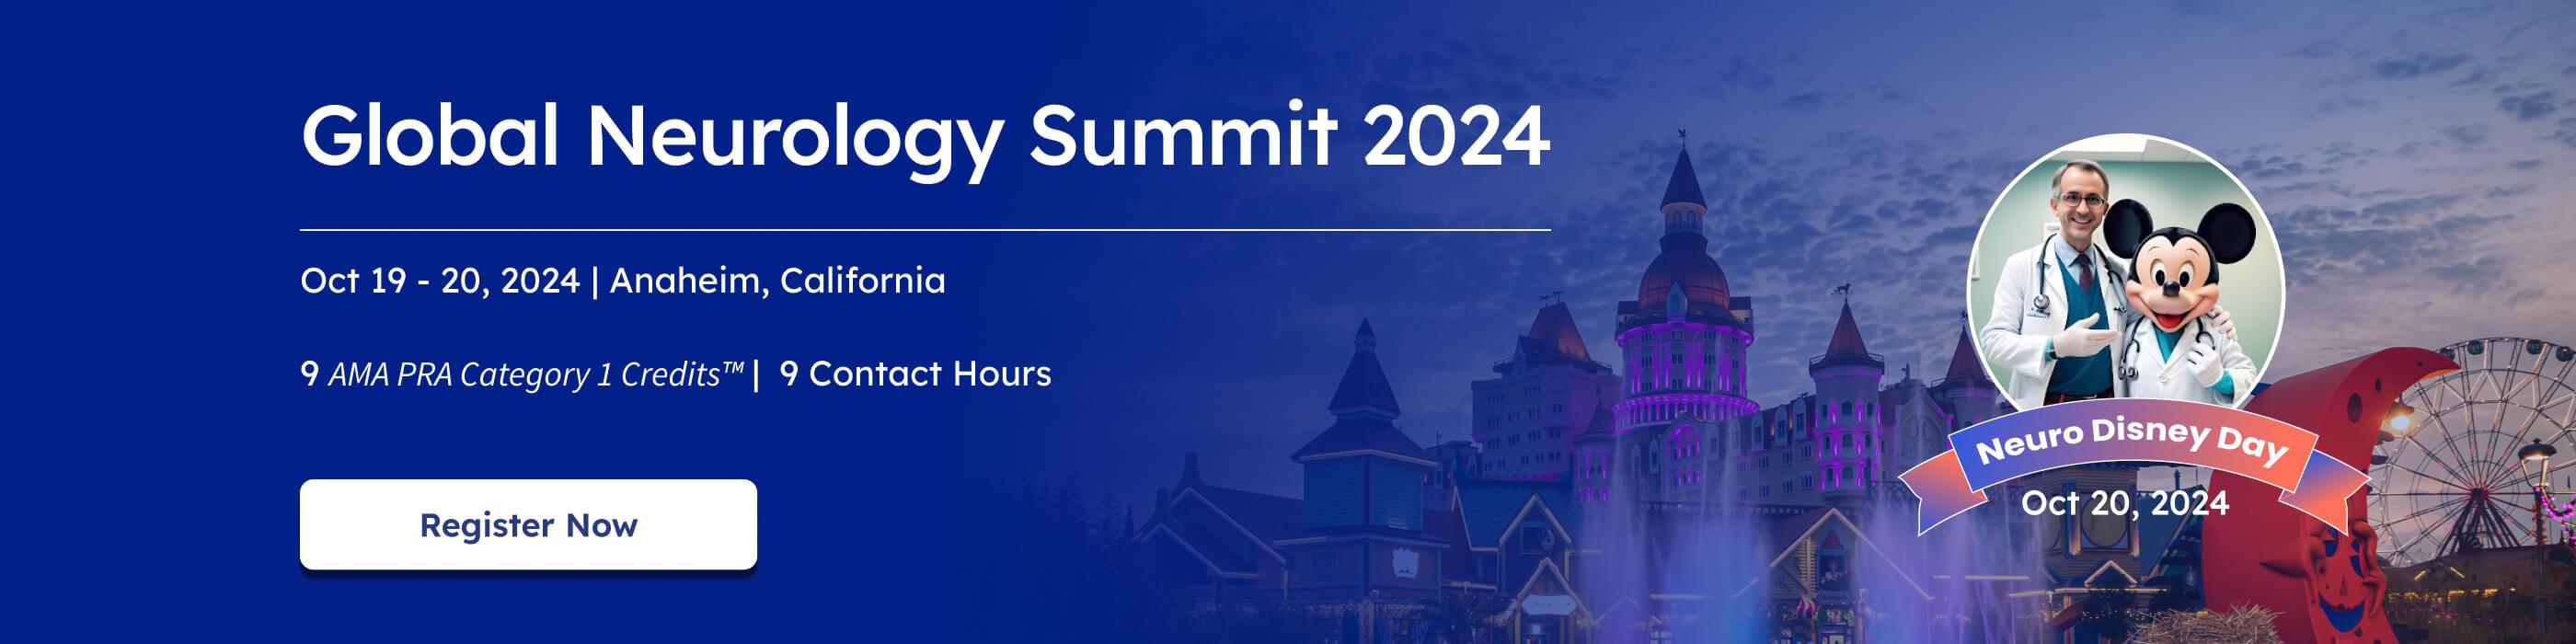 global_summit2024_banner